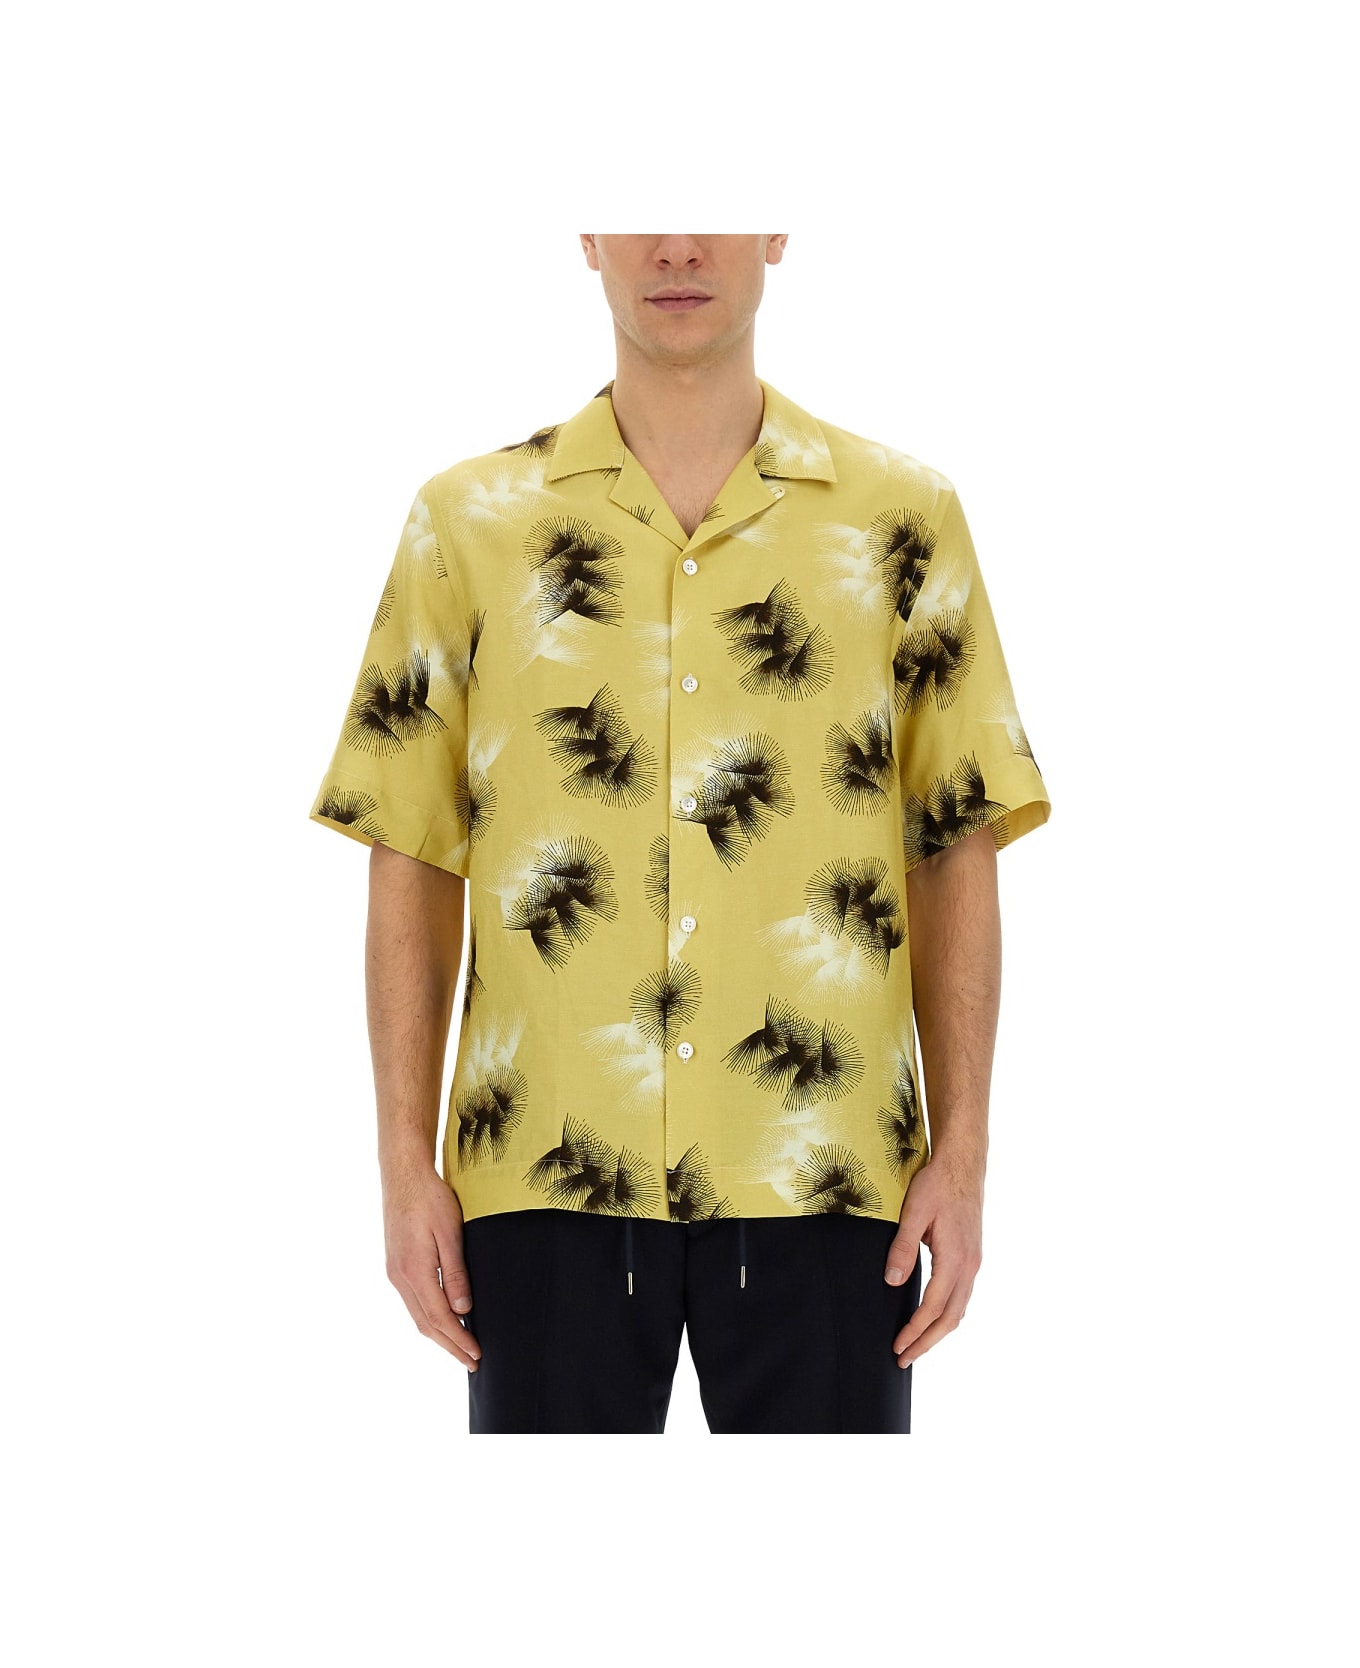 Paul Smith Shirts - YELLOW シャツ